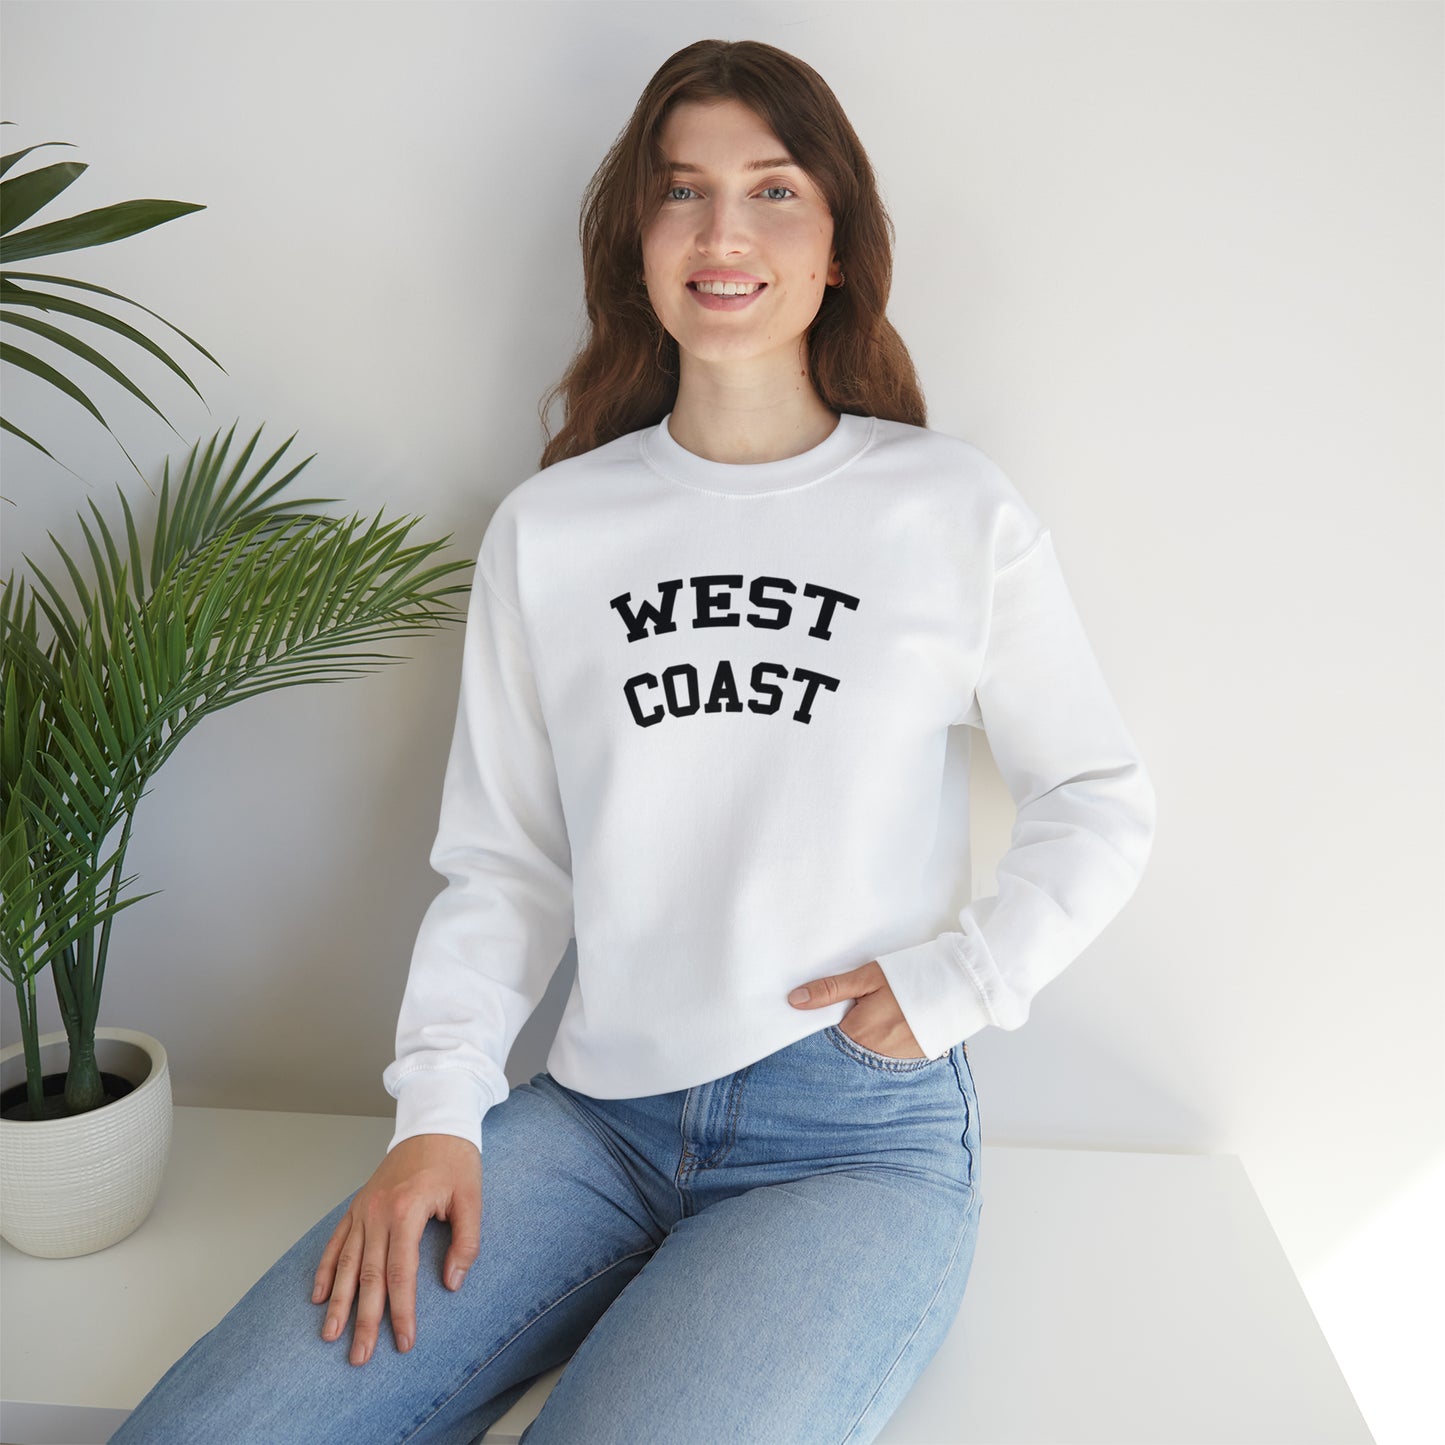 West Coast Crewneck Sweatshirt